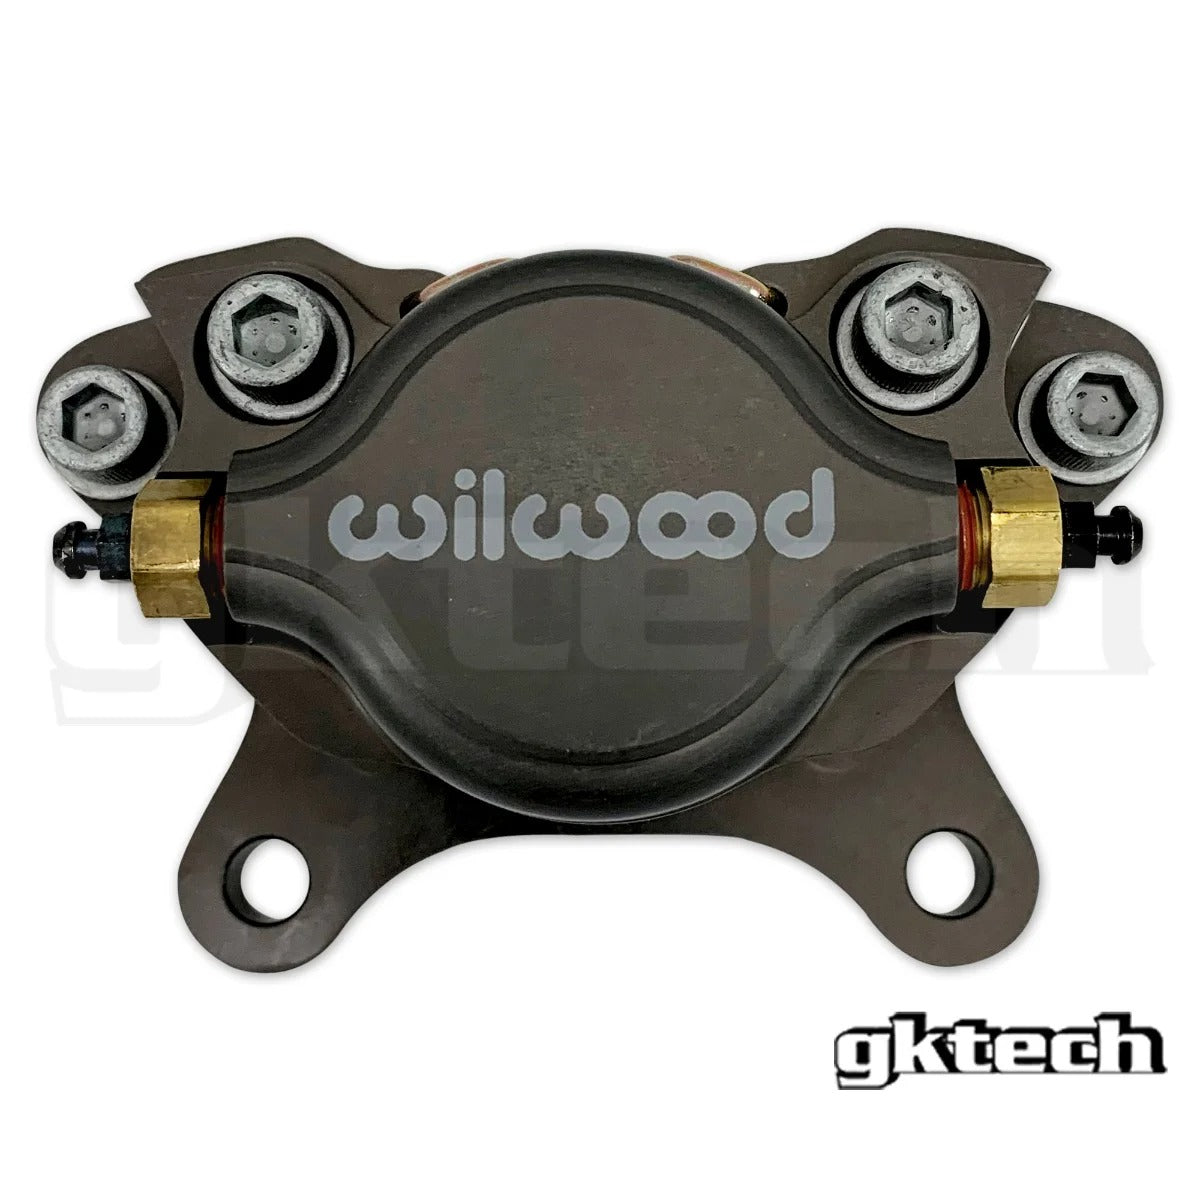 Wilwood 240sx dual caliper Hydraulic e-brake setup - (10% combo discount)